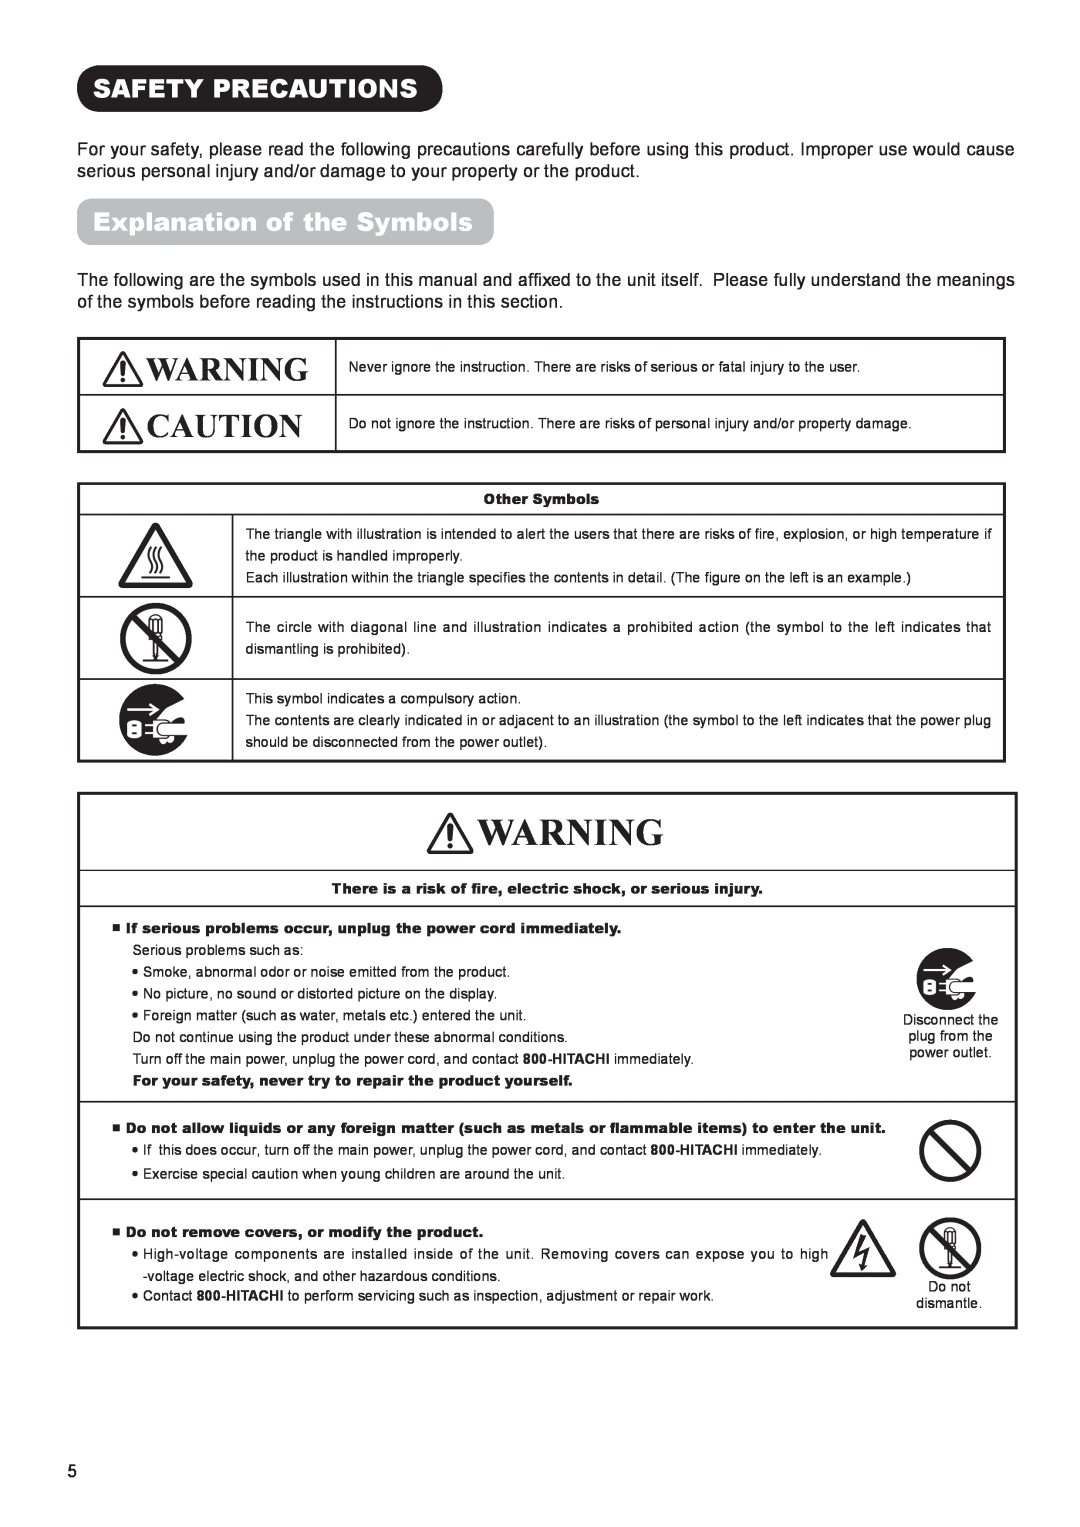 Hitachi UT47X902, UT37X902, UT42X902 manual Safety Precautions, Explanation of the Symbols, Other Symbols 